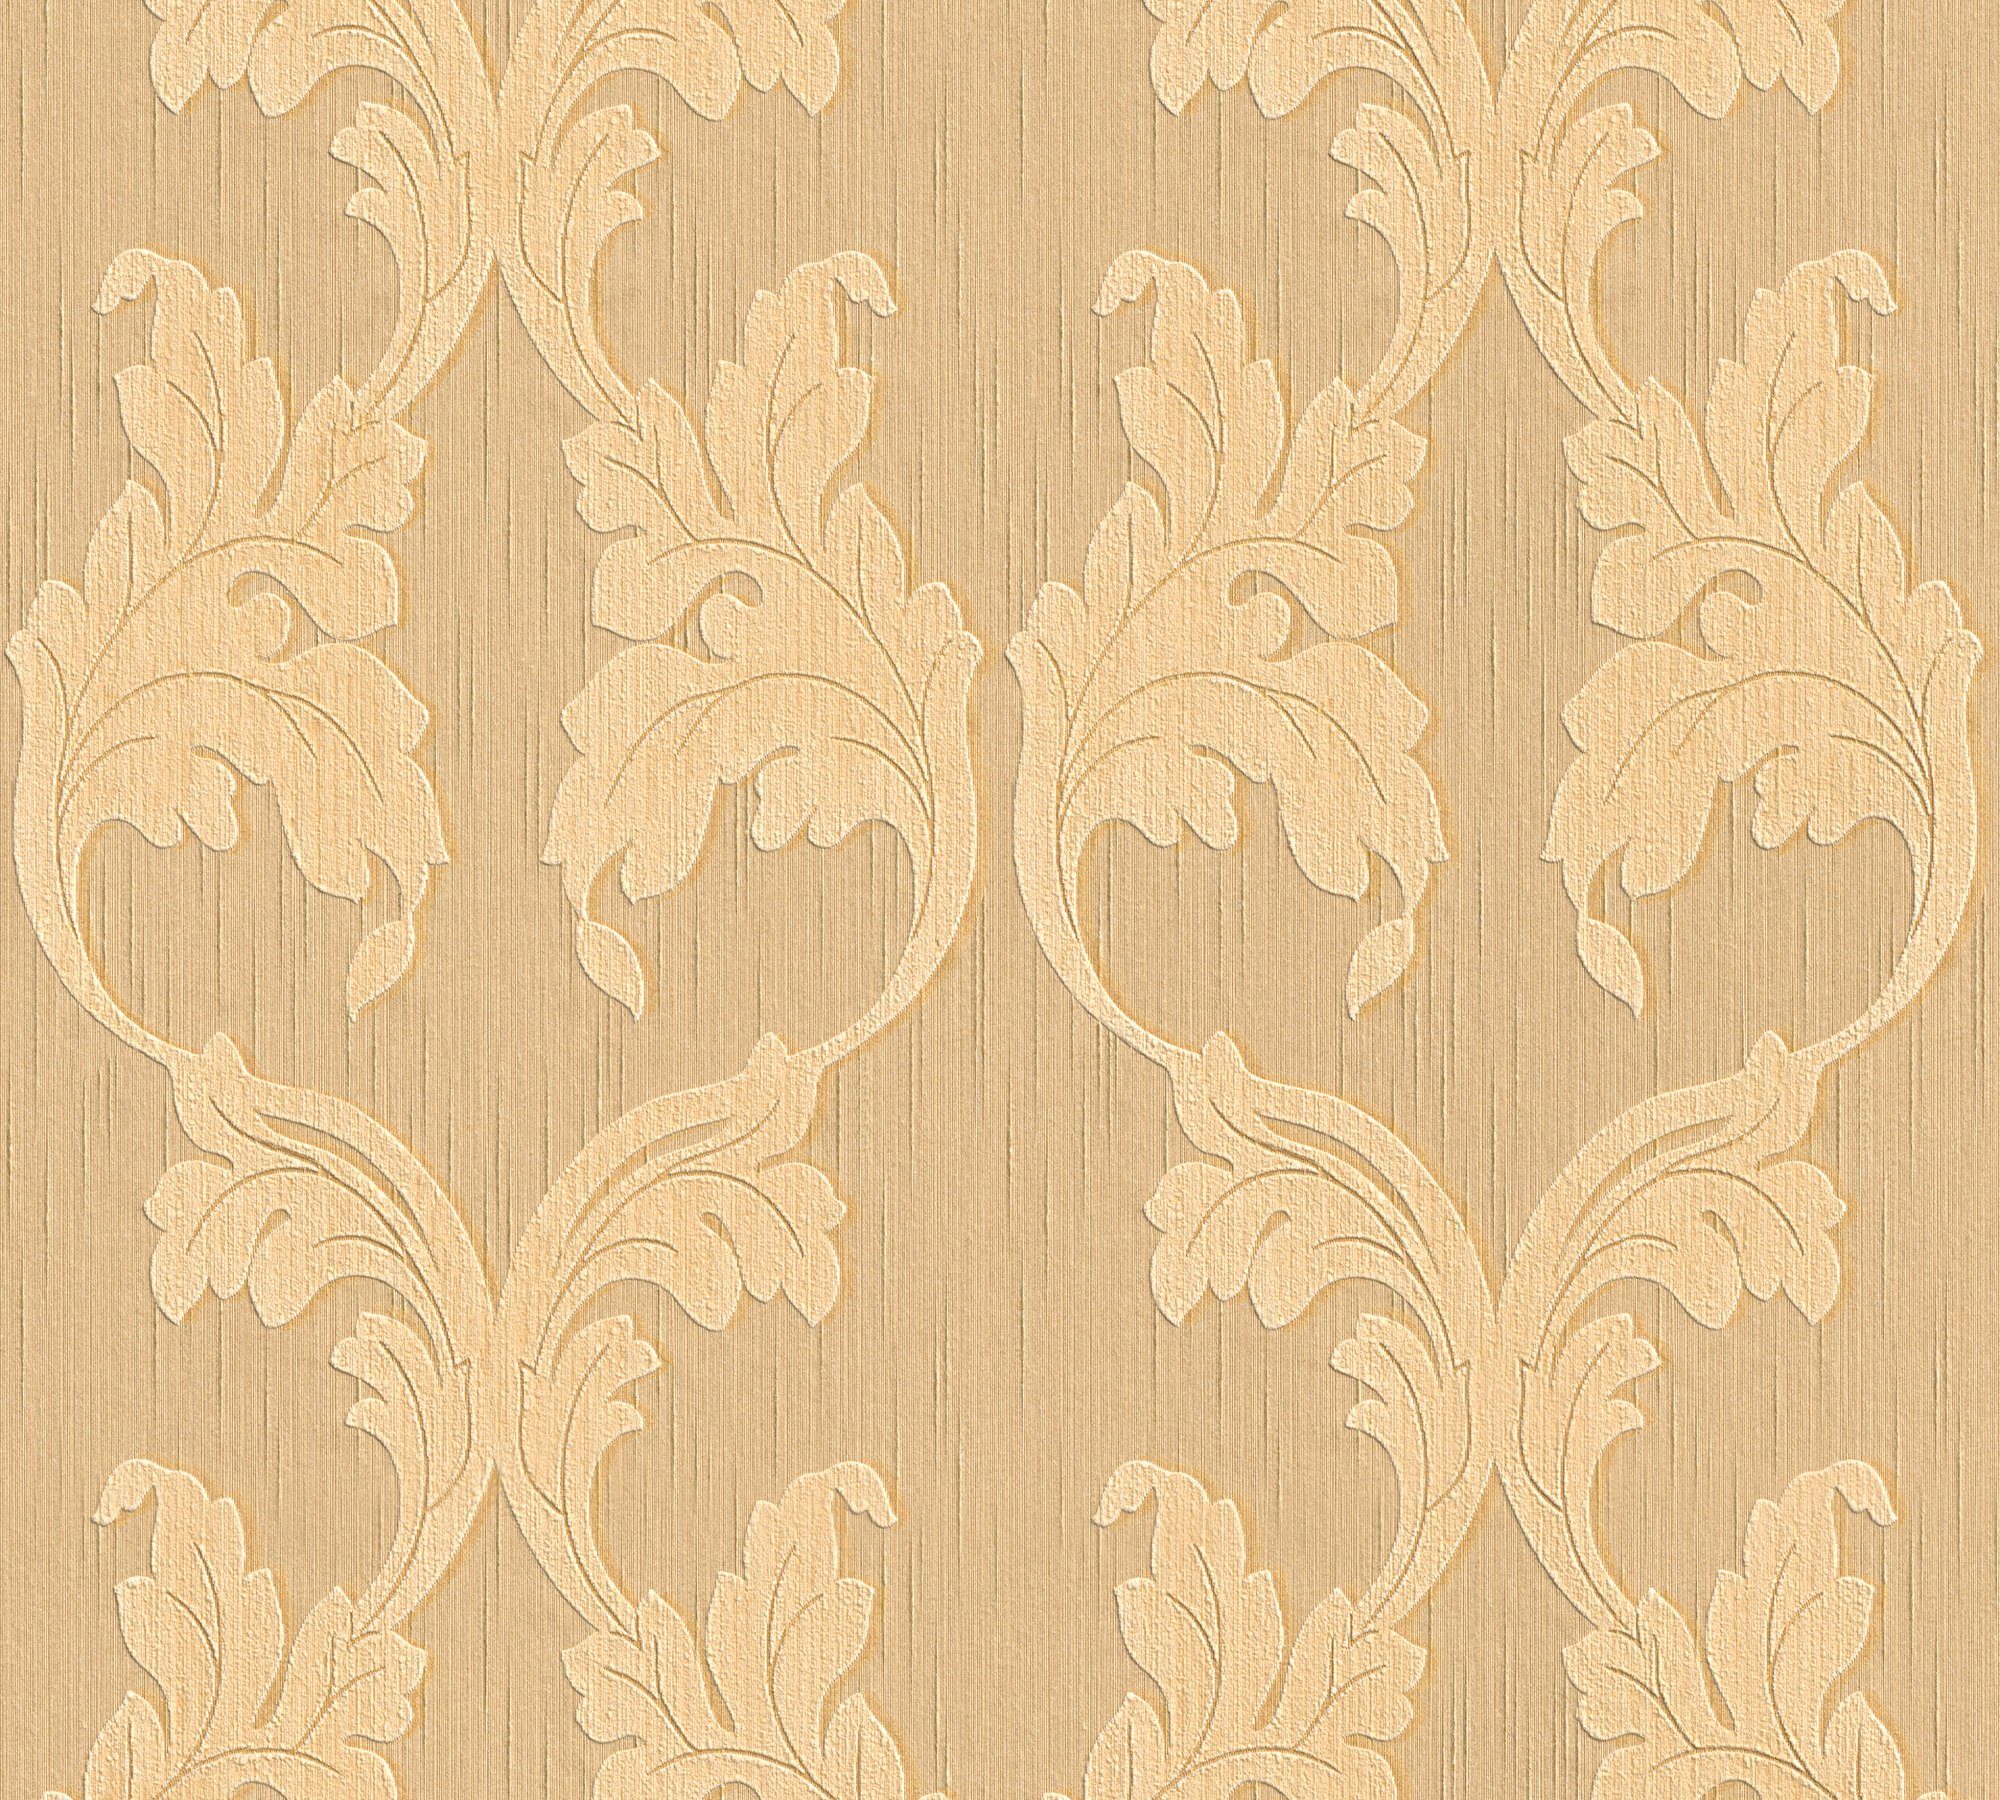 Paper A.S. Barock samtig, Textiltapete Barock, Tapete orange/beige Création Tessuto, floral, Architects